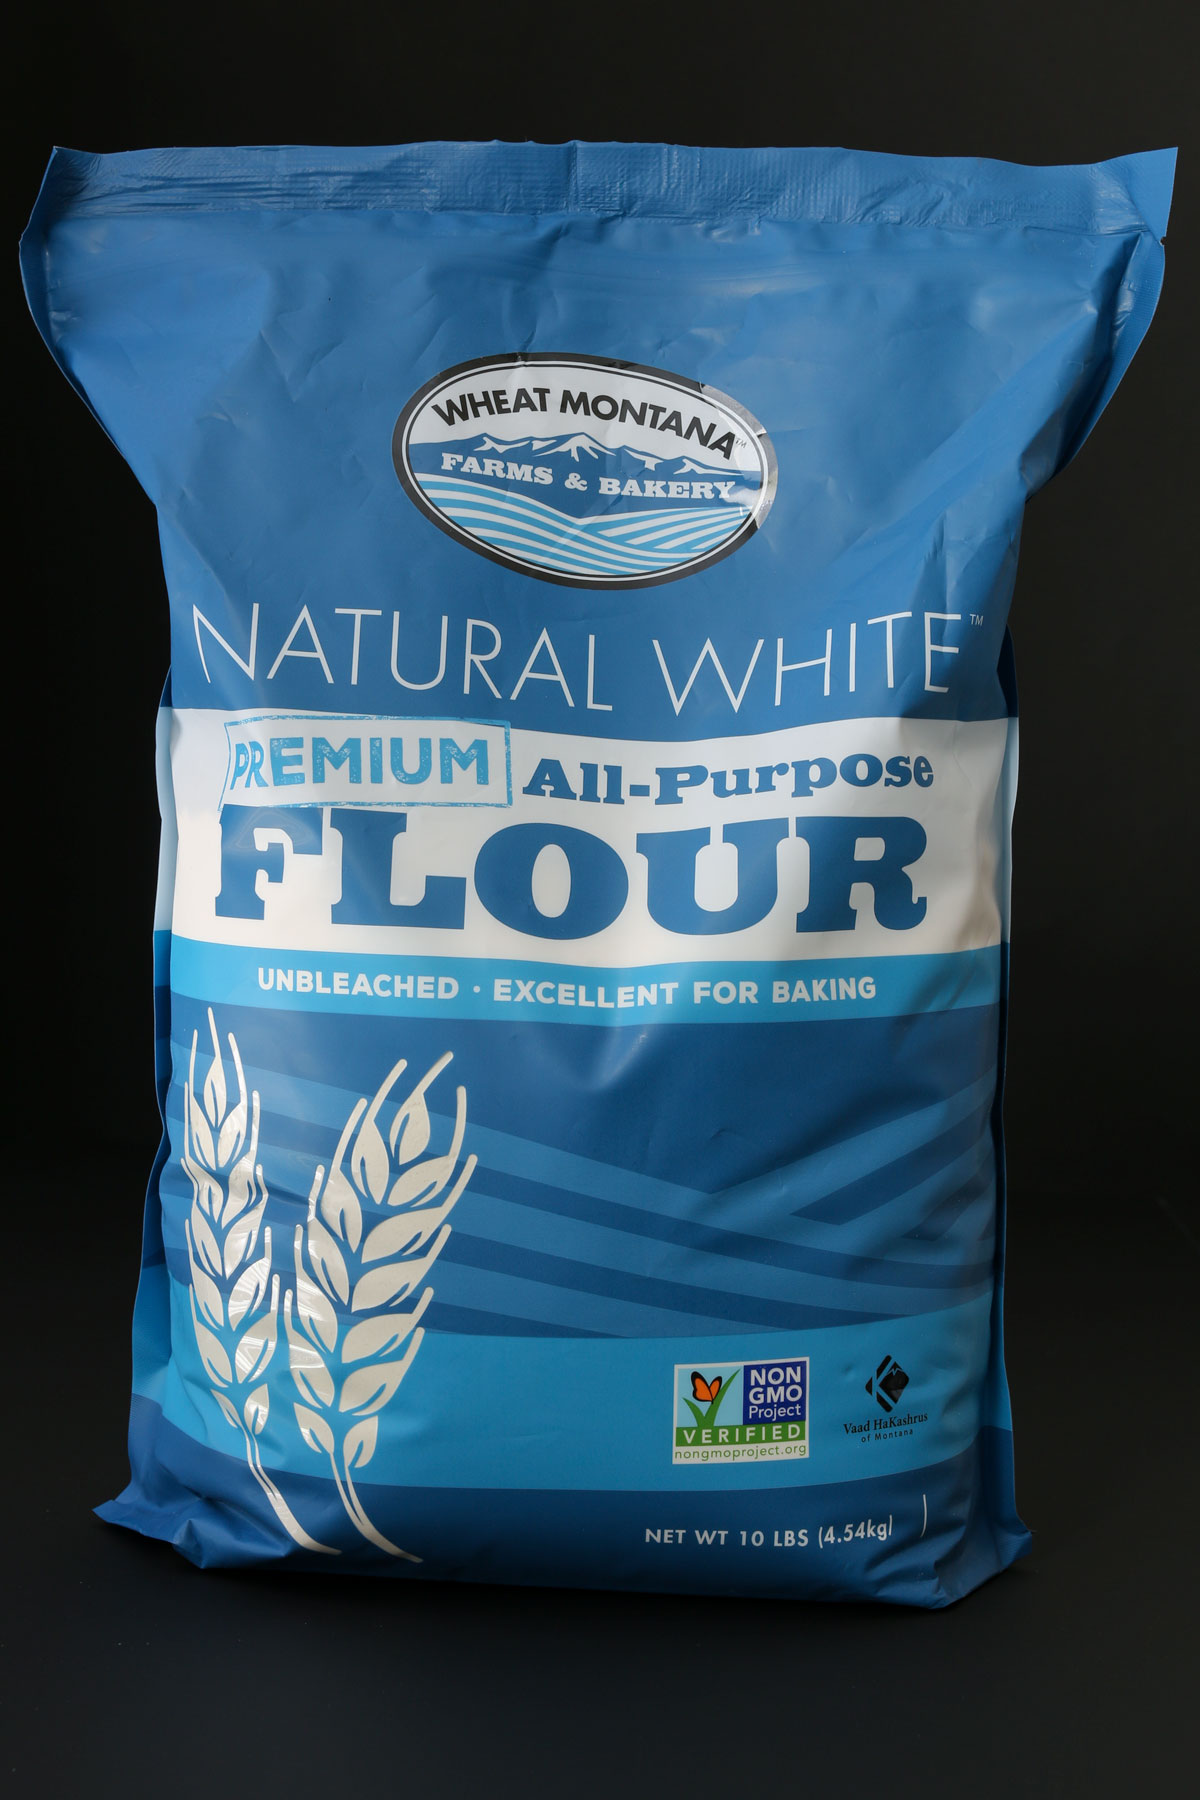 brand new bag of flour on black table.